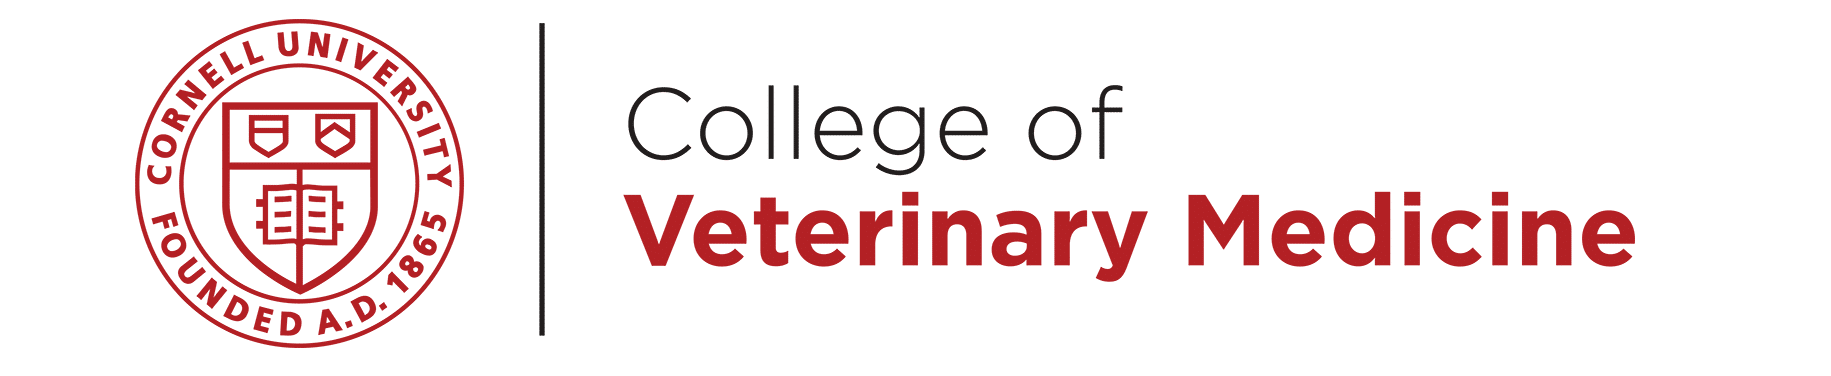 Cornell University College of Veterinary Medicine logo